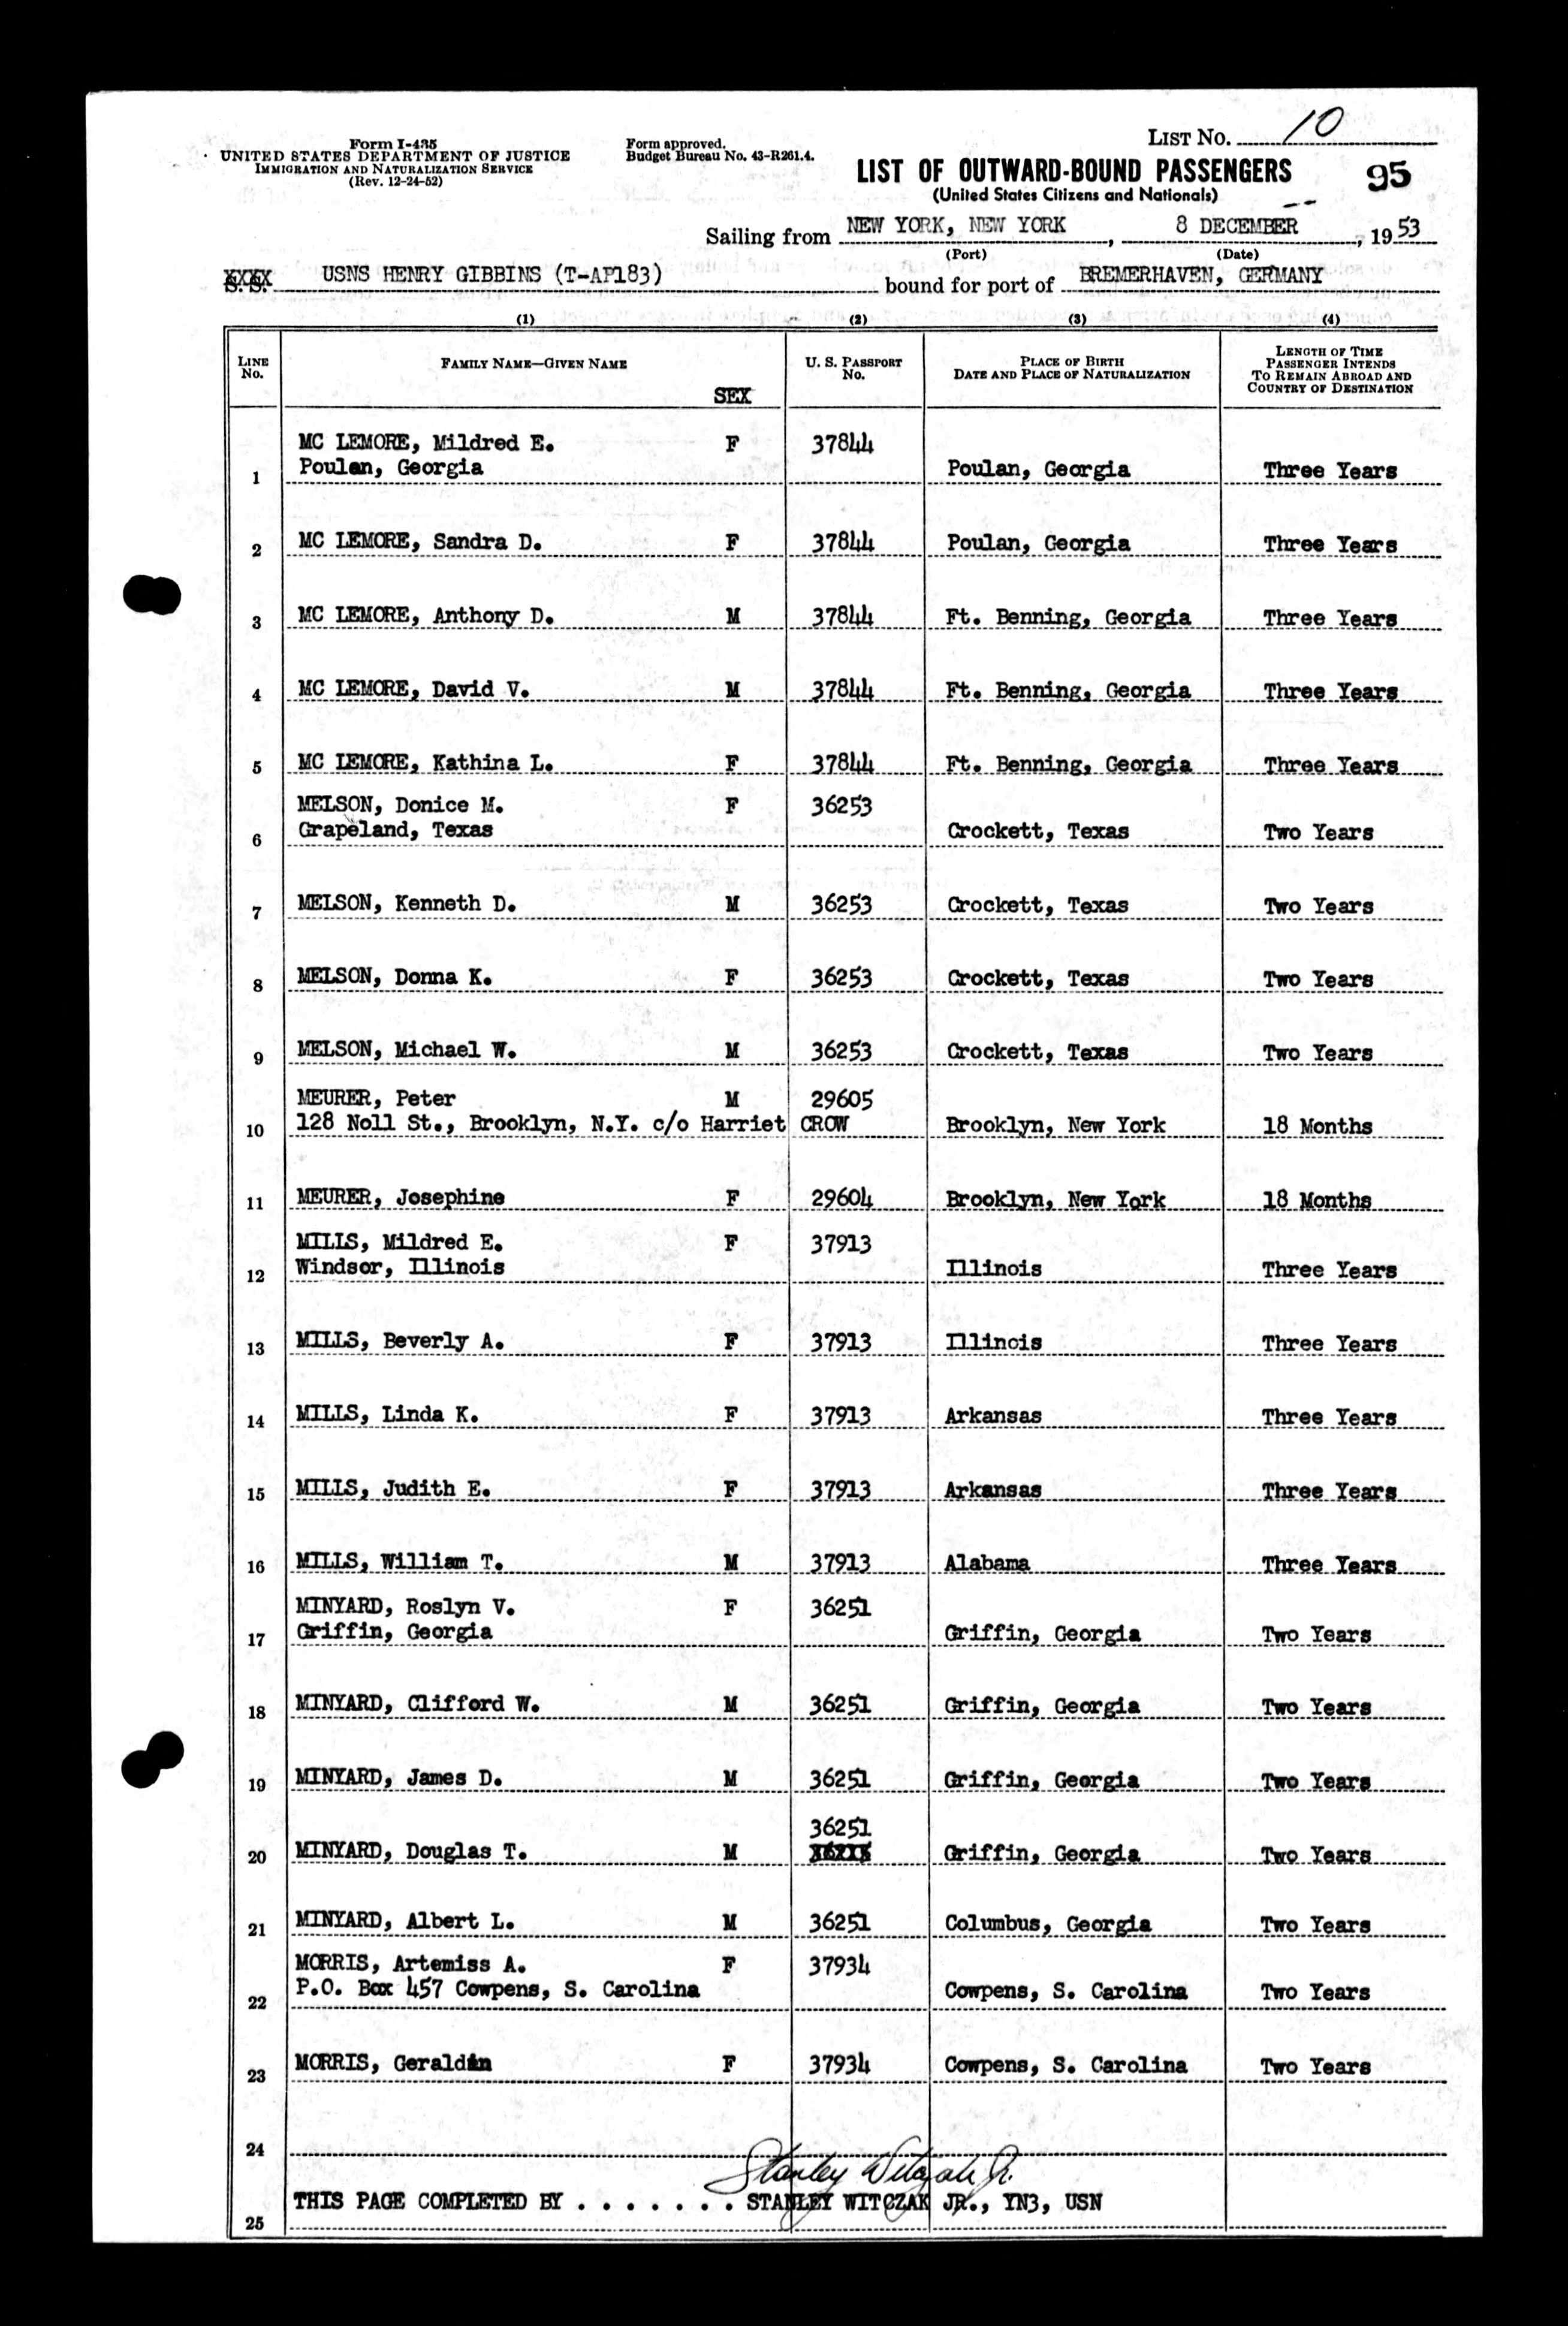 Passenger List from USNS Henry Gibbins, December 8, 1953, Albert L. Minyard, line 21